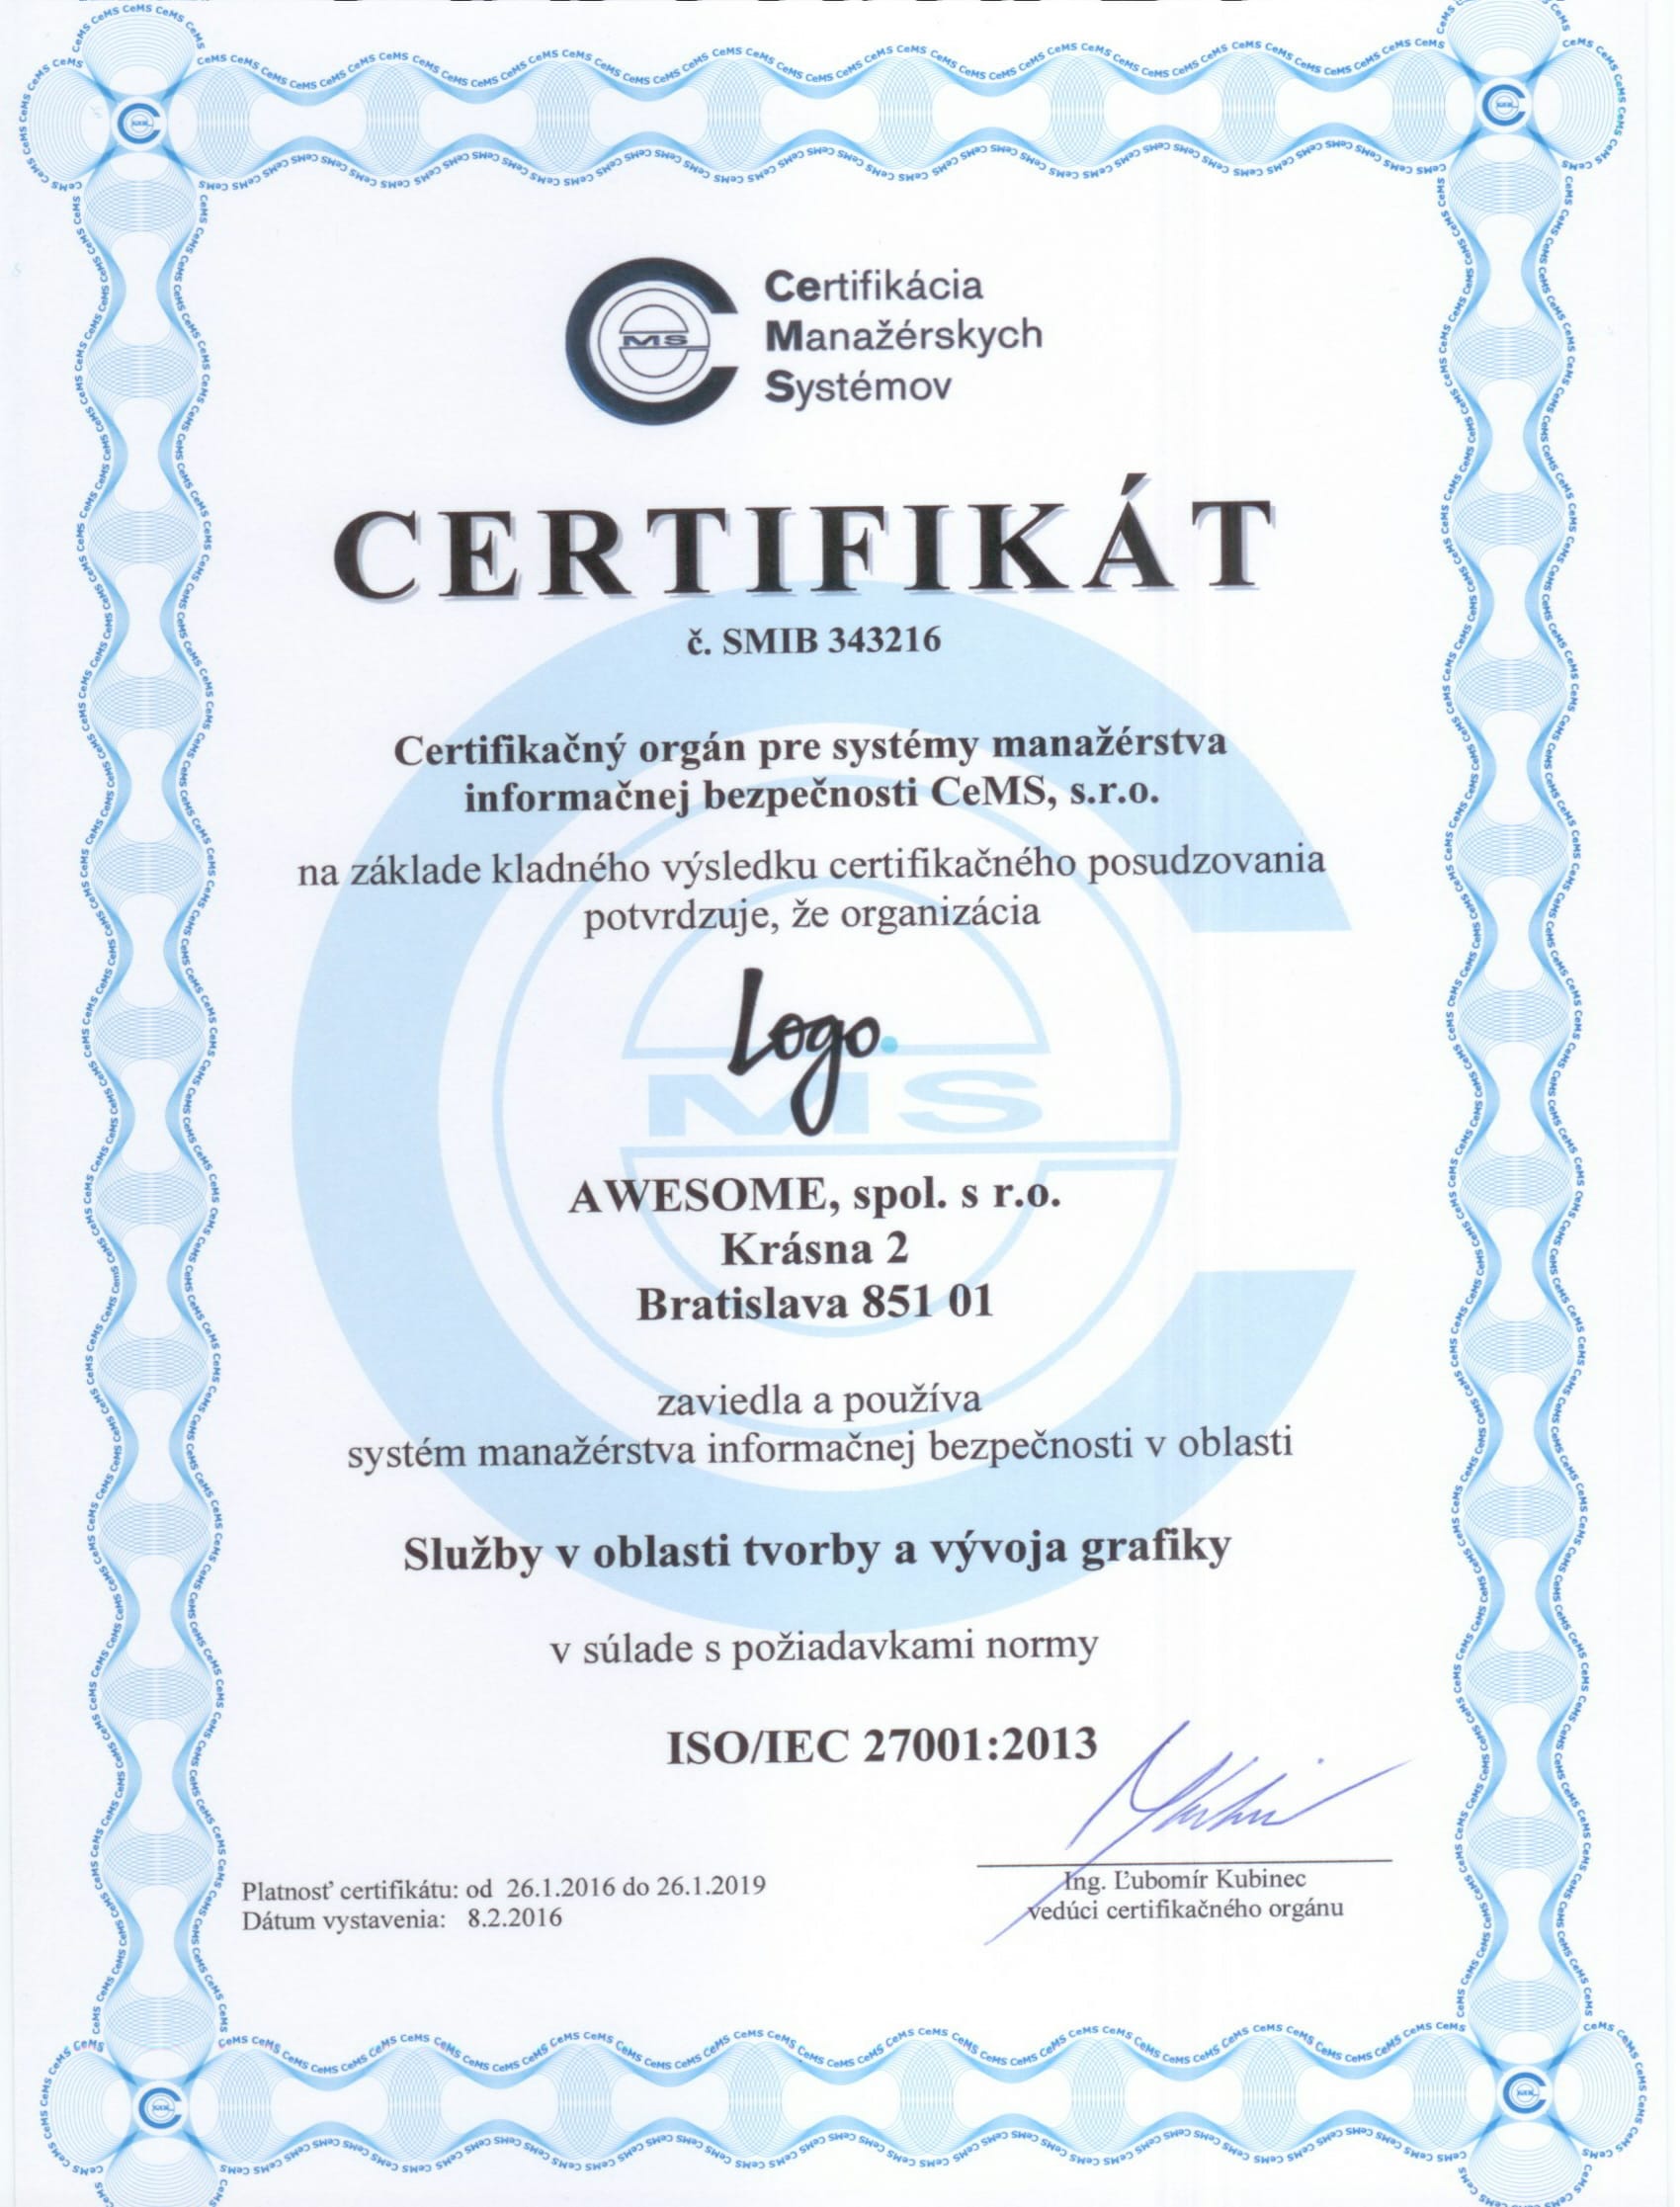 vzor certifikátu ISO 27001 od CeMS